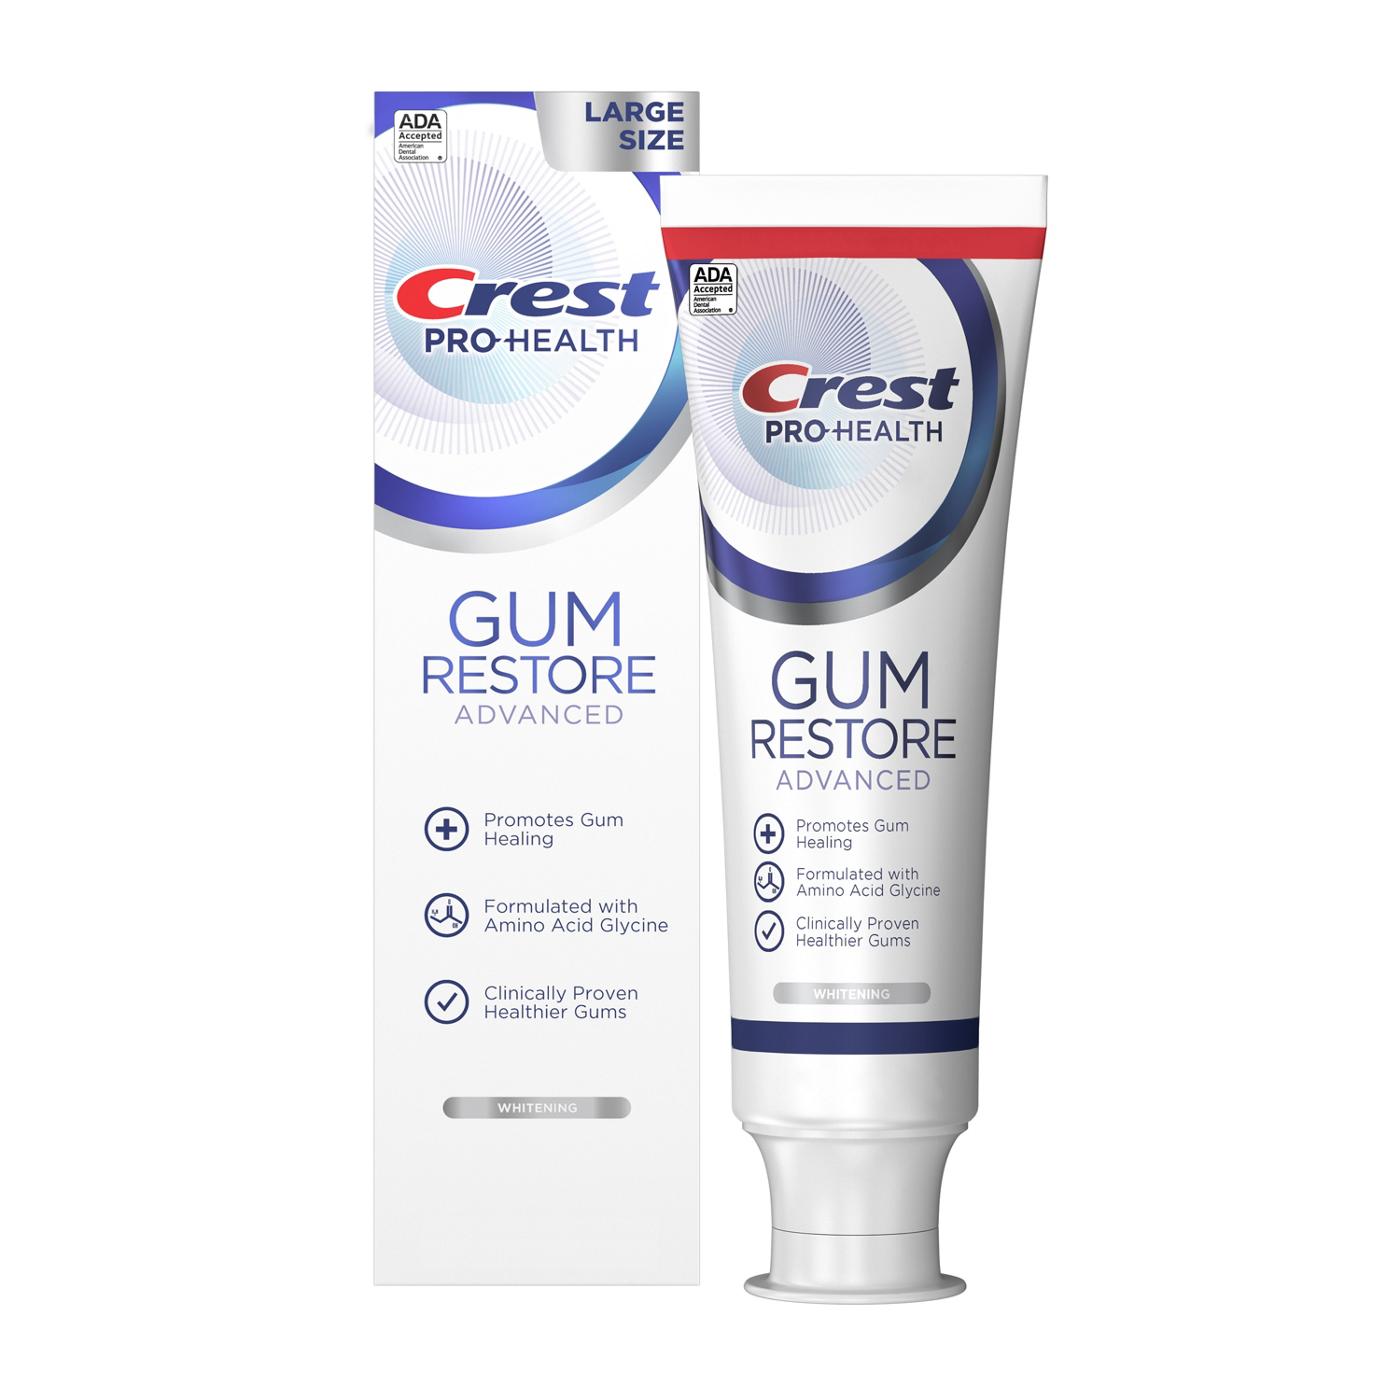 Crest Pro Health Gum Restore Advanced Toothpaste - Whitening; image 7 of 8